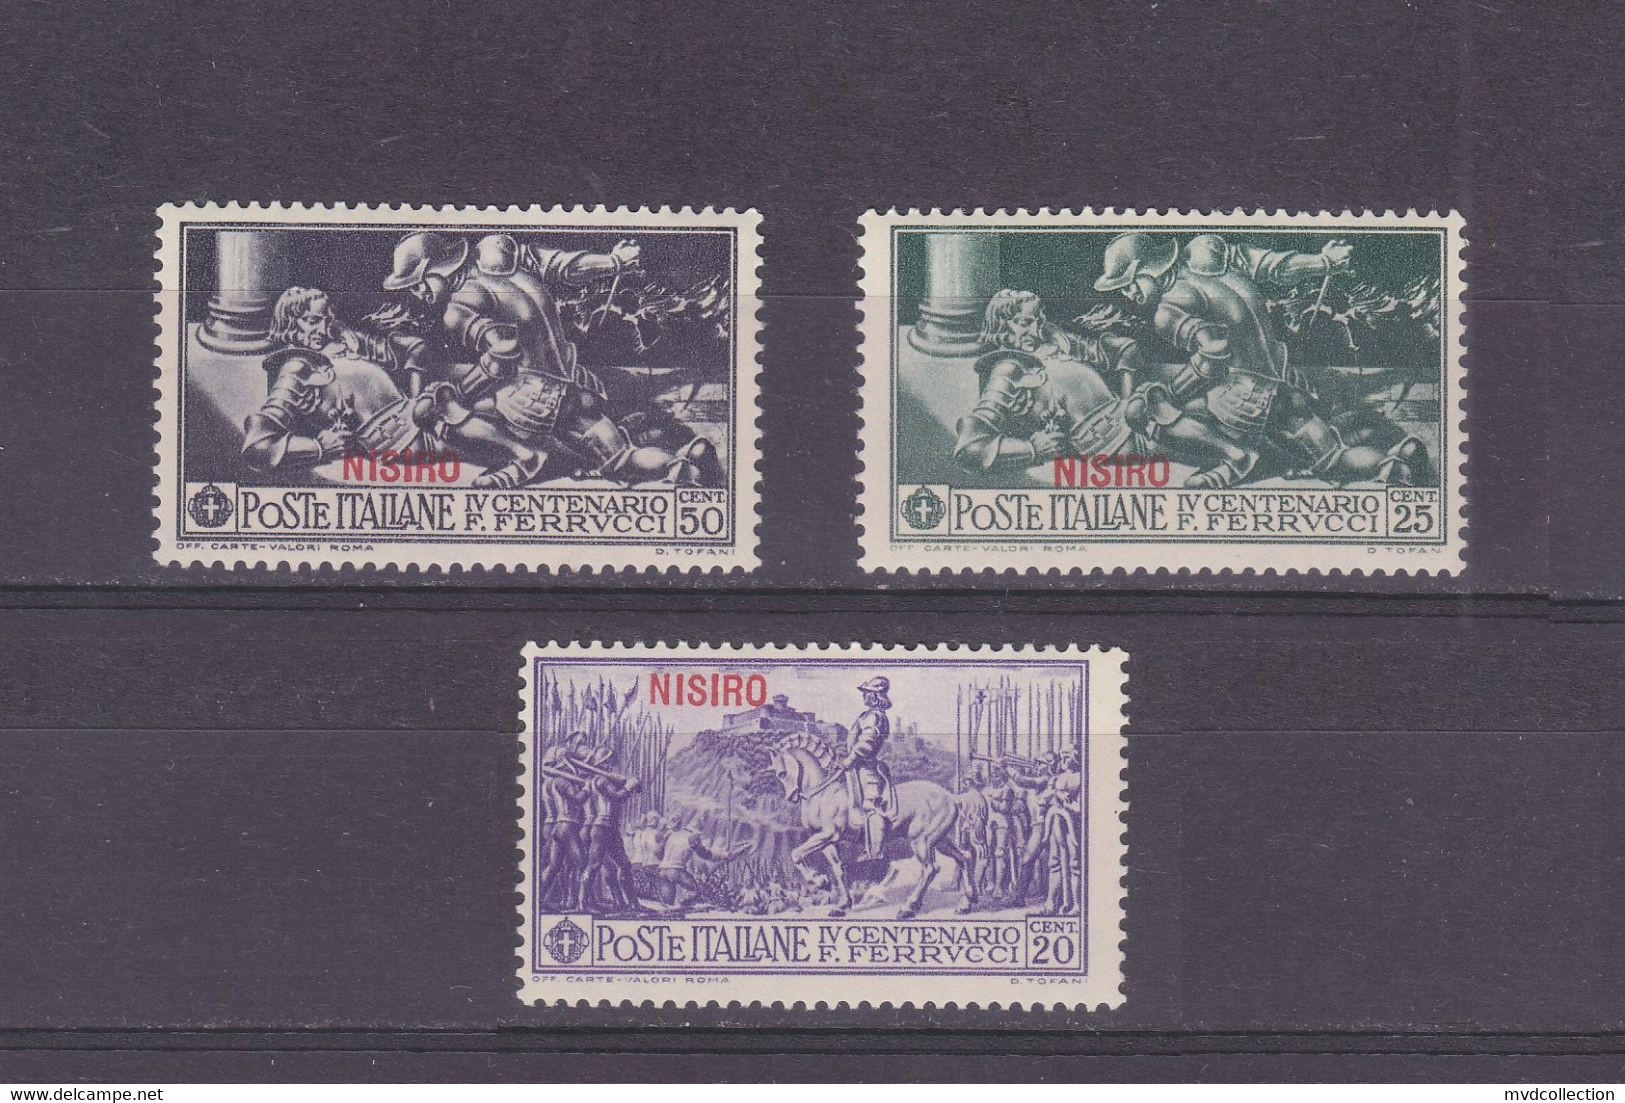 ITALY Lot CENTENARIO FERRUCCI Stamps Overprinted NISIRO 1930 VF MH Original Gum - Egeo (Nisiro)